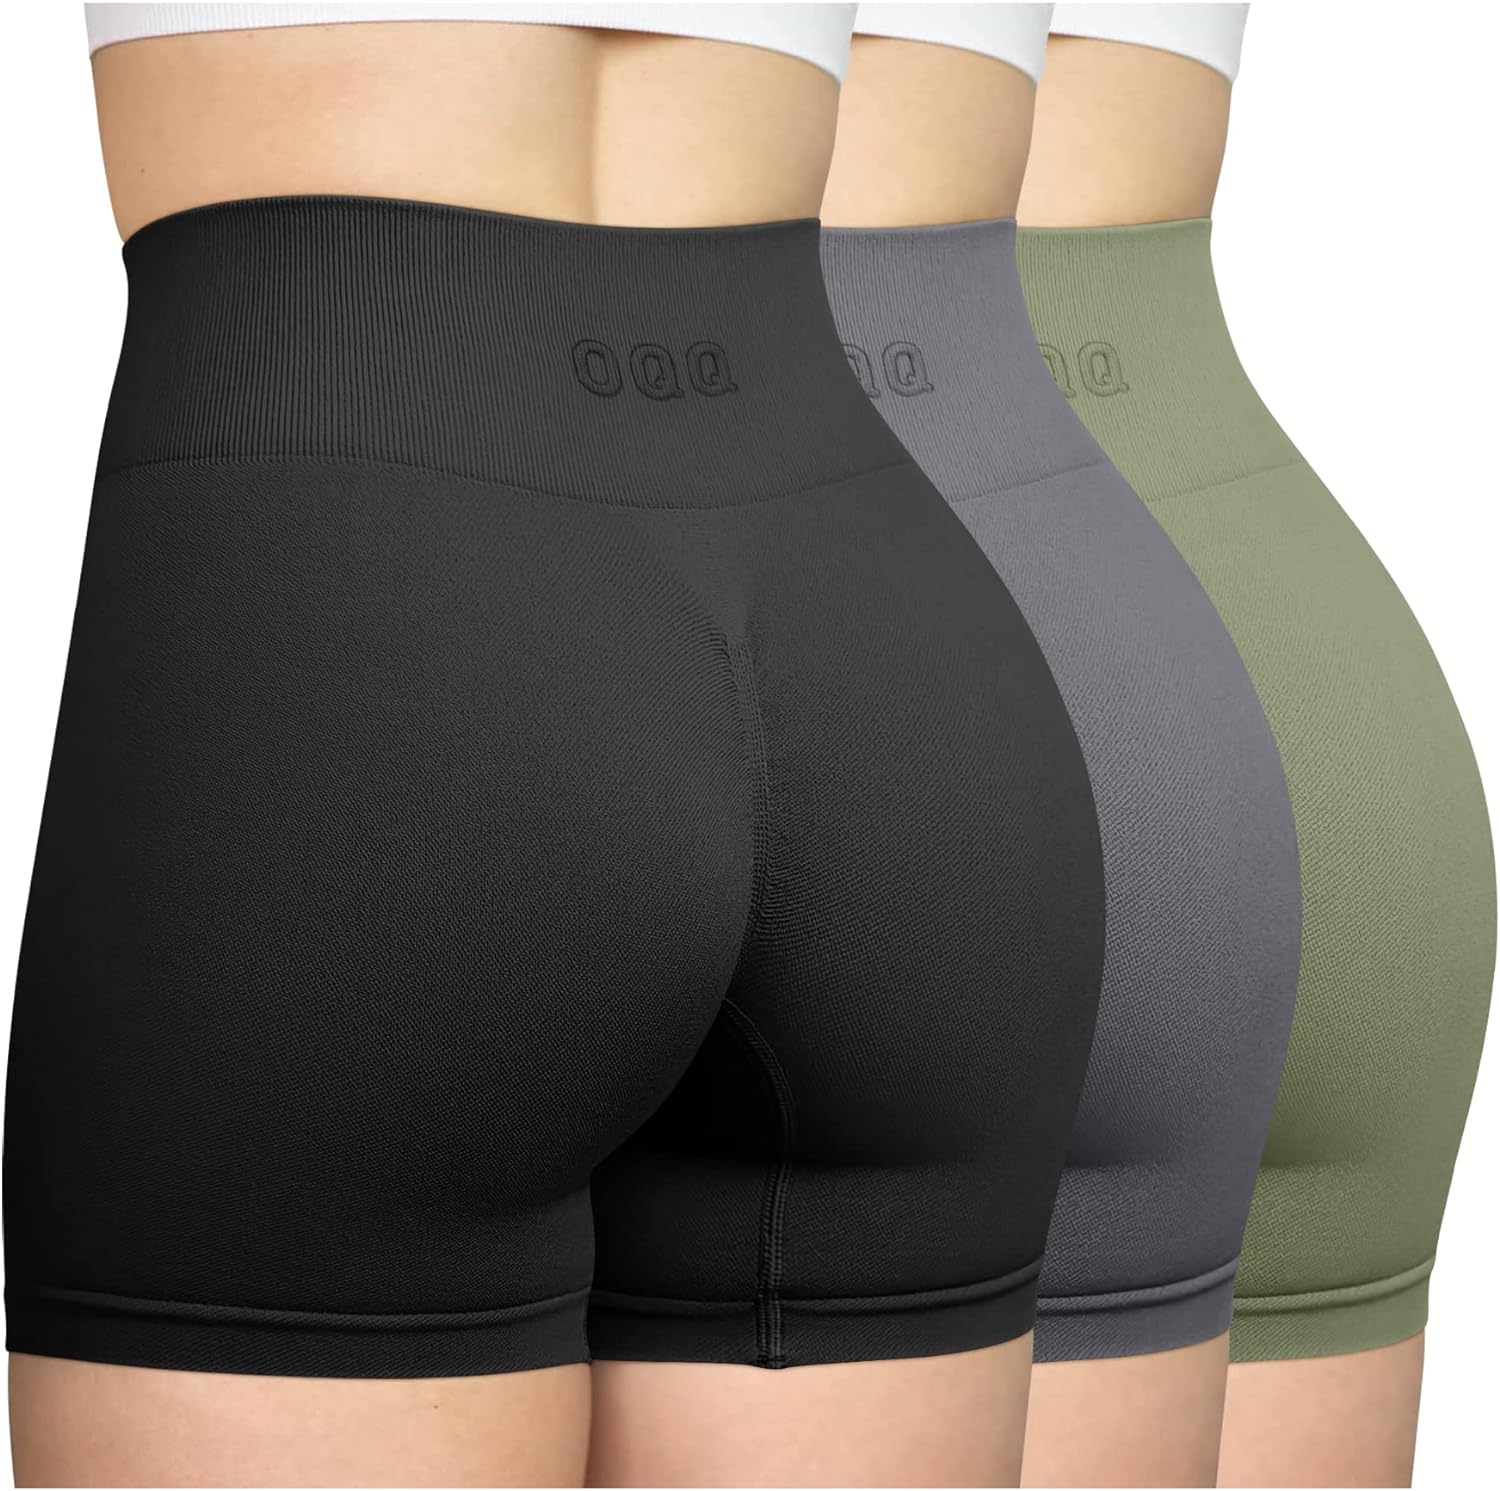 Womens Lifting Shorts WholeSale - Price List, Bulk Buy at